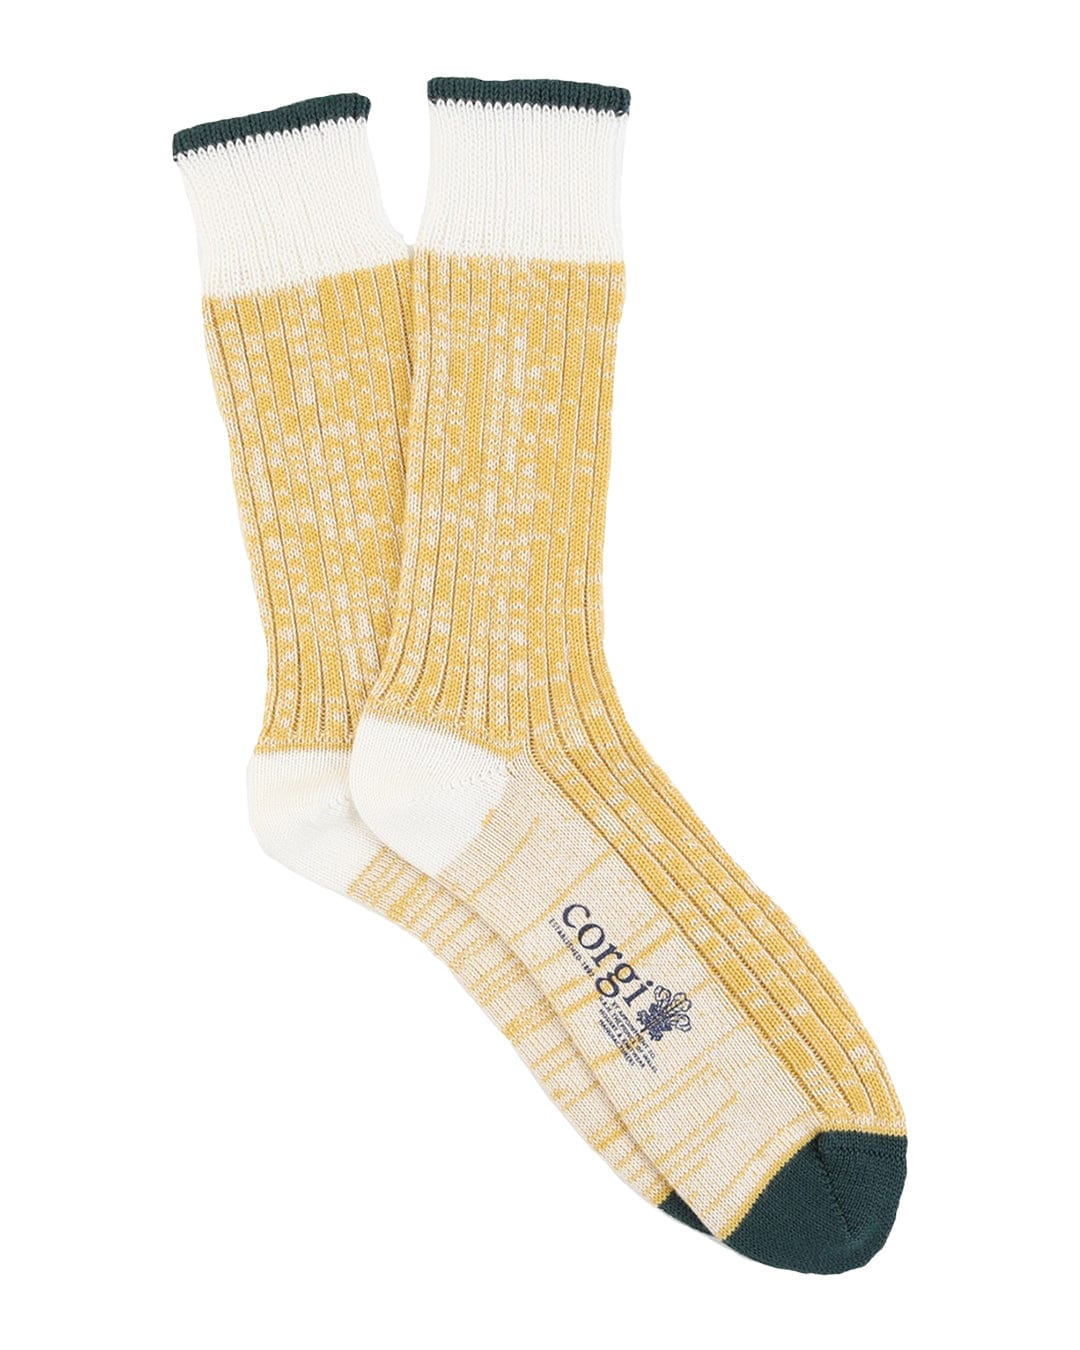 Corgi Socks Corgi Space Dye Pure Cotton Yellow Socks